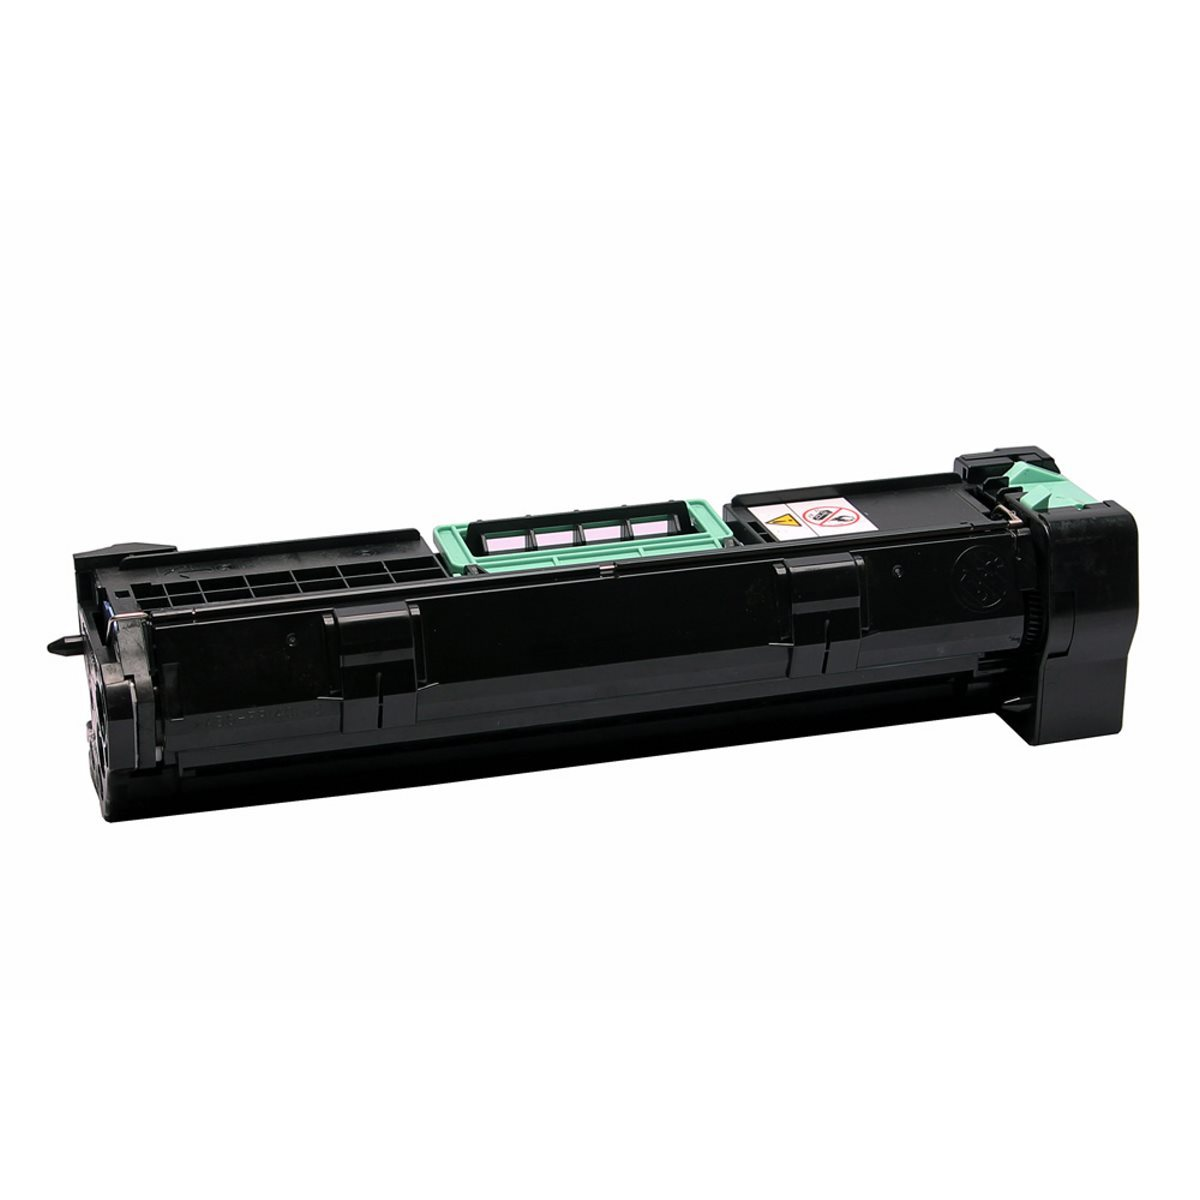 Tinte verfügbar Bildtrommel Kompatibel nicht (X850H22G) ABC